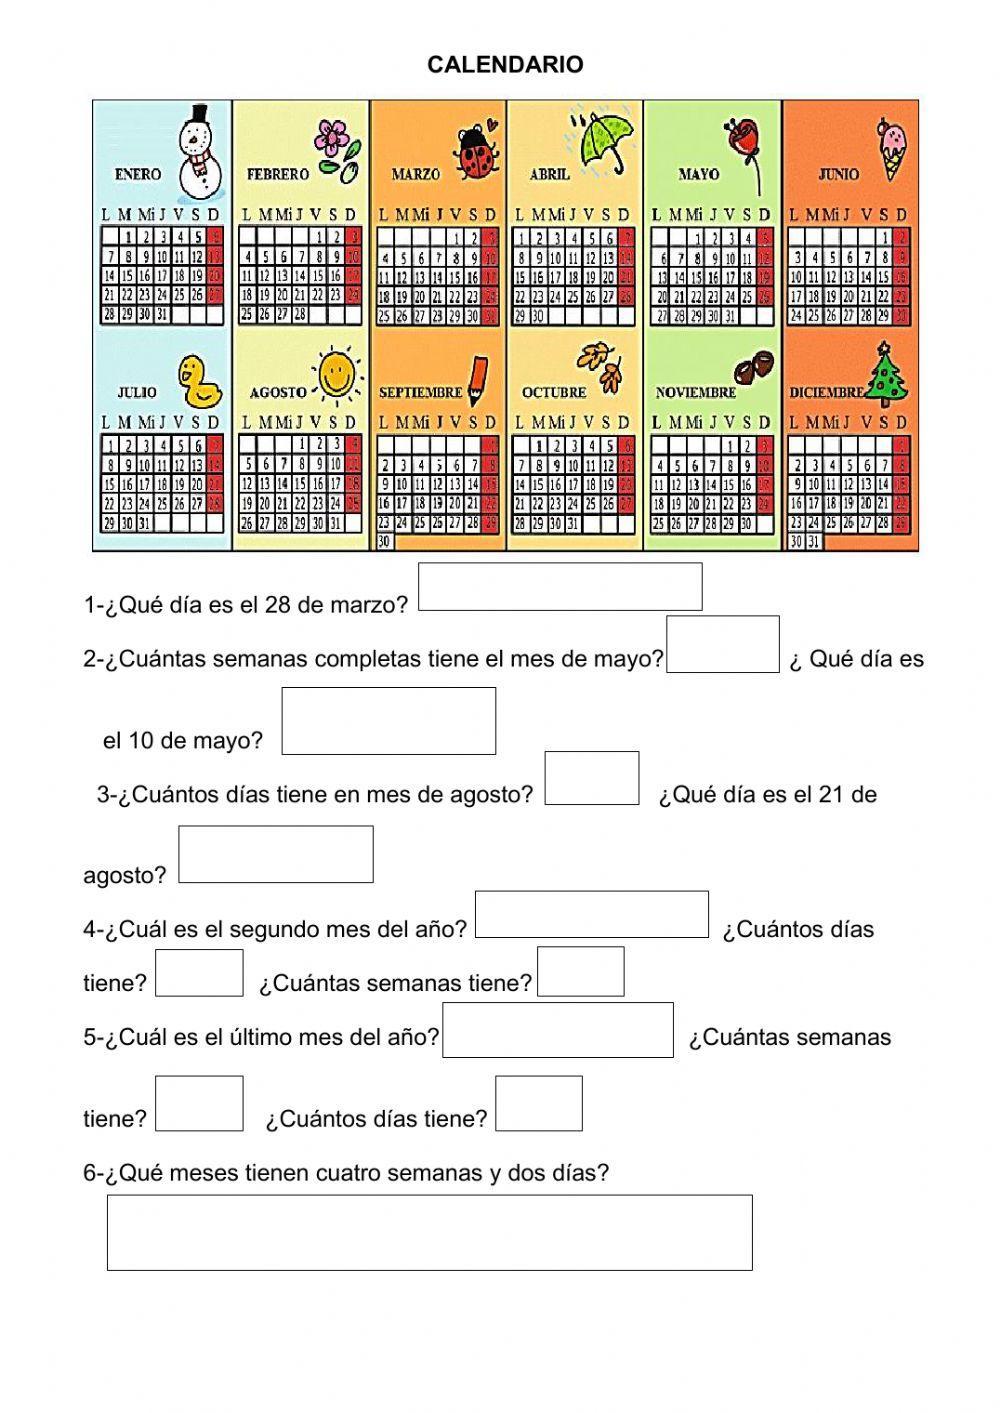 Calendario interactive worksheet for 2º primaria | Live Worksheets